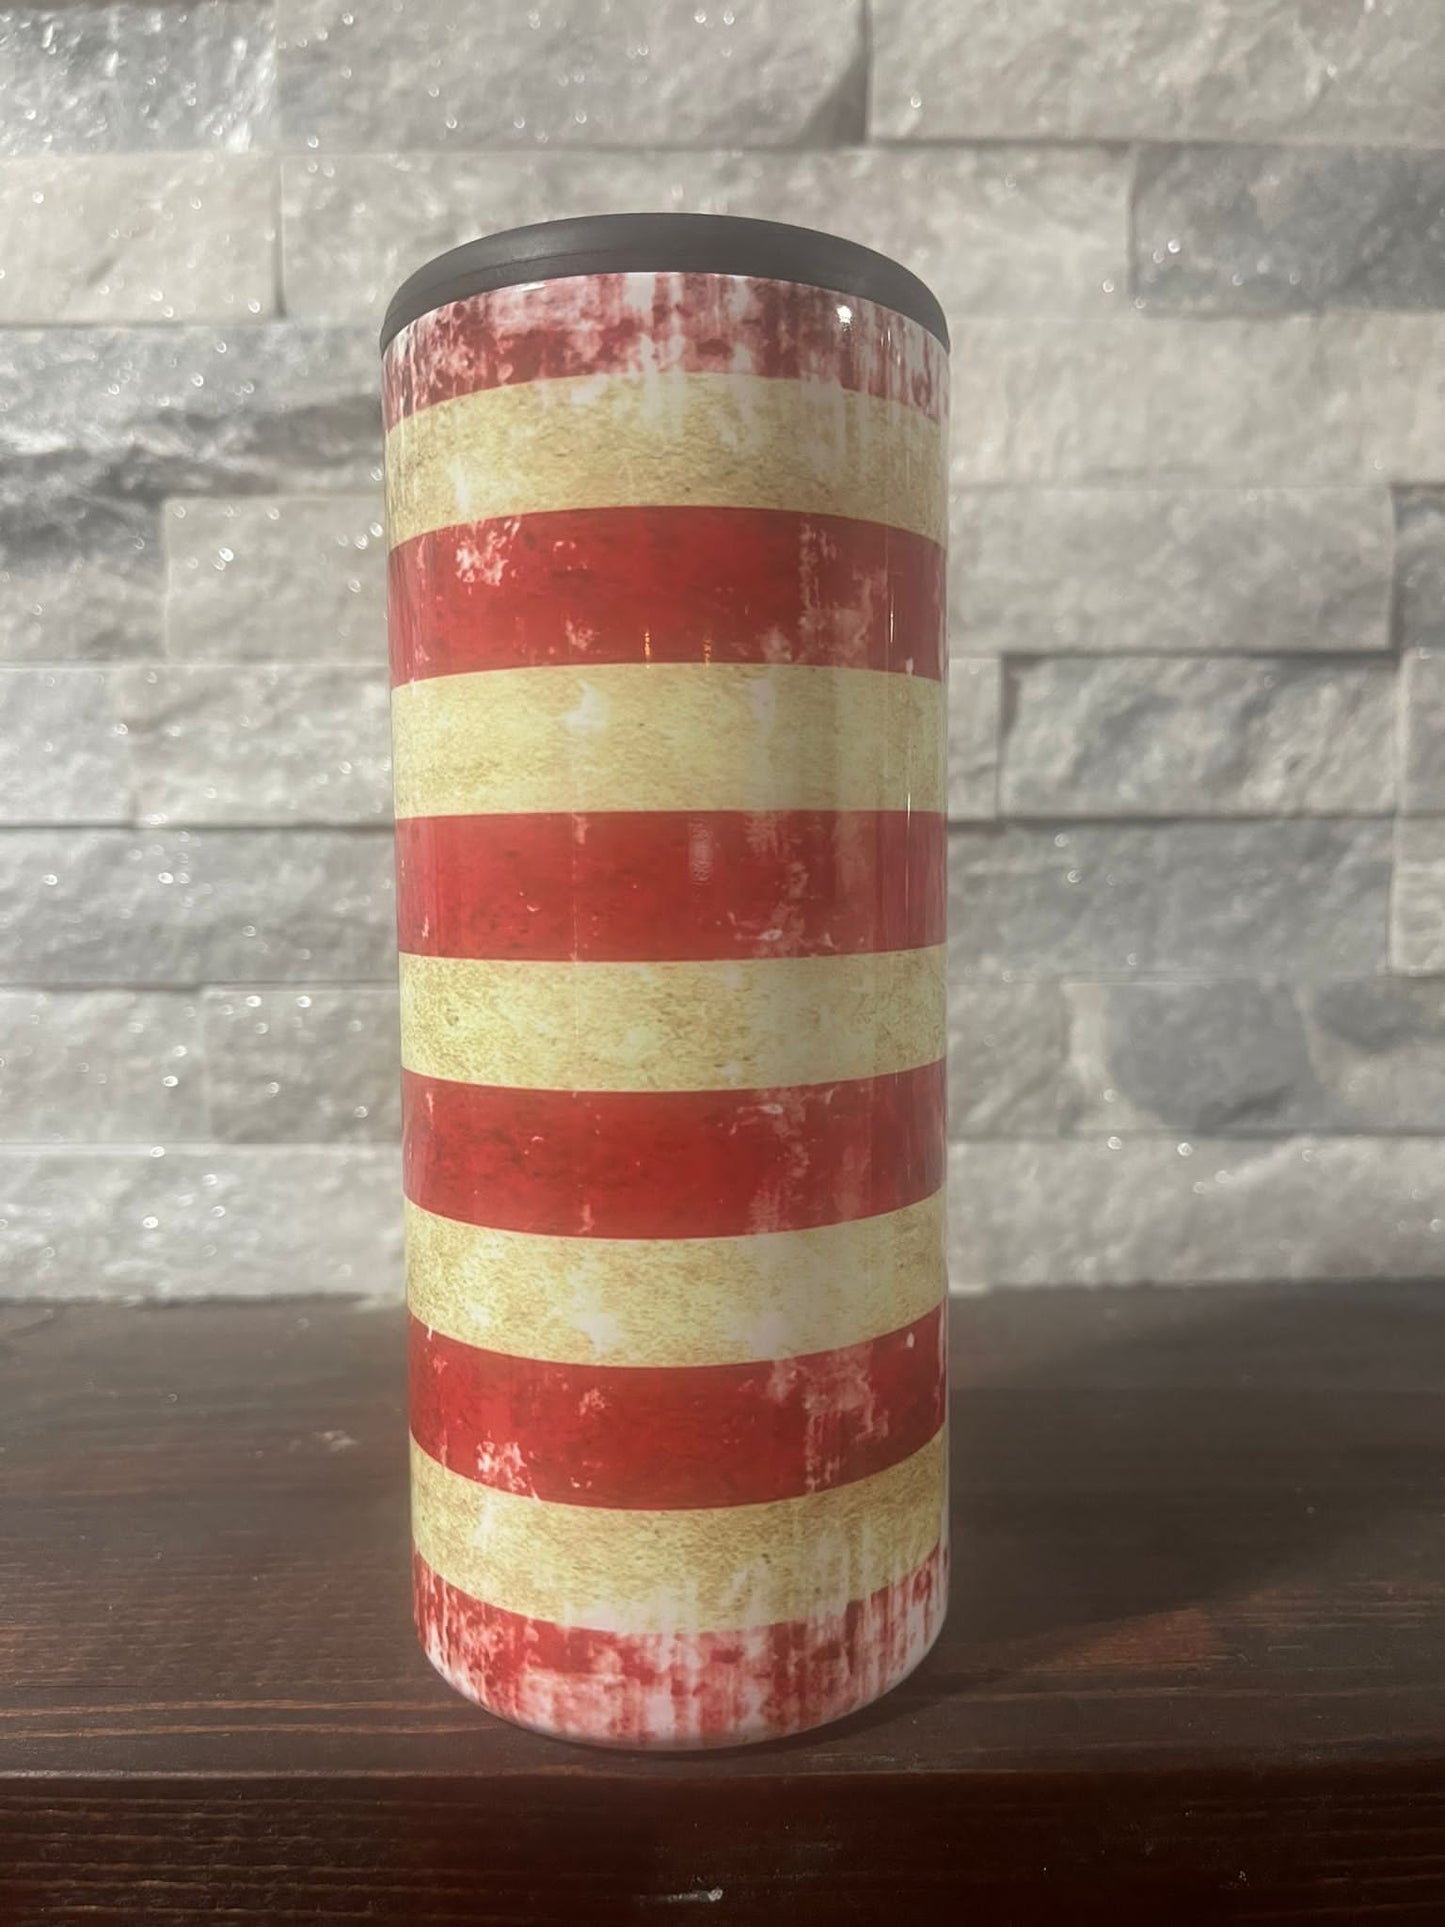 Rustic American flag Can/Bottle Tumbler